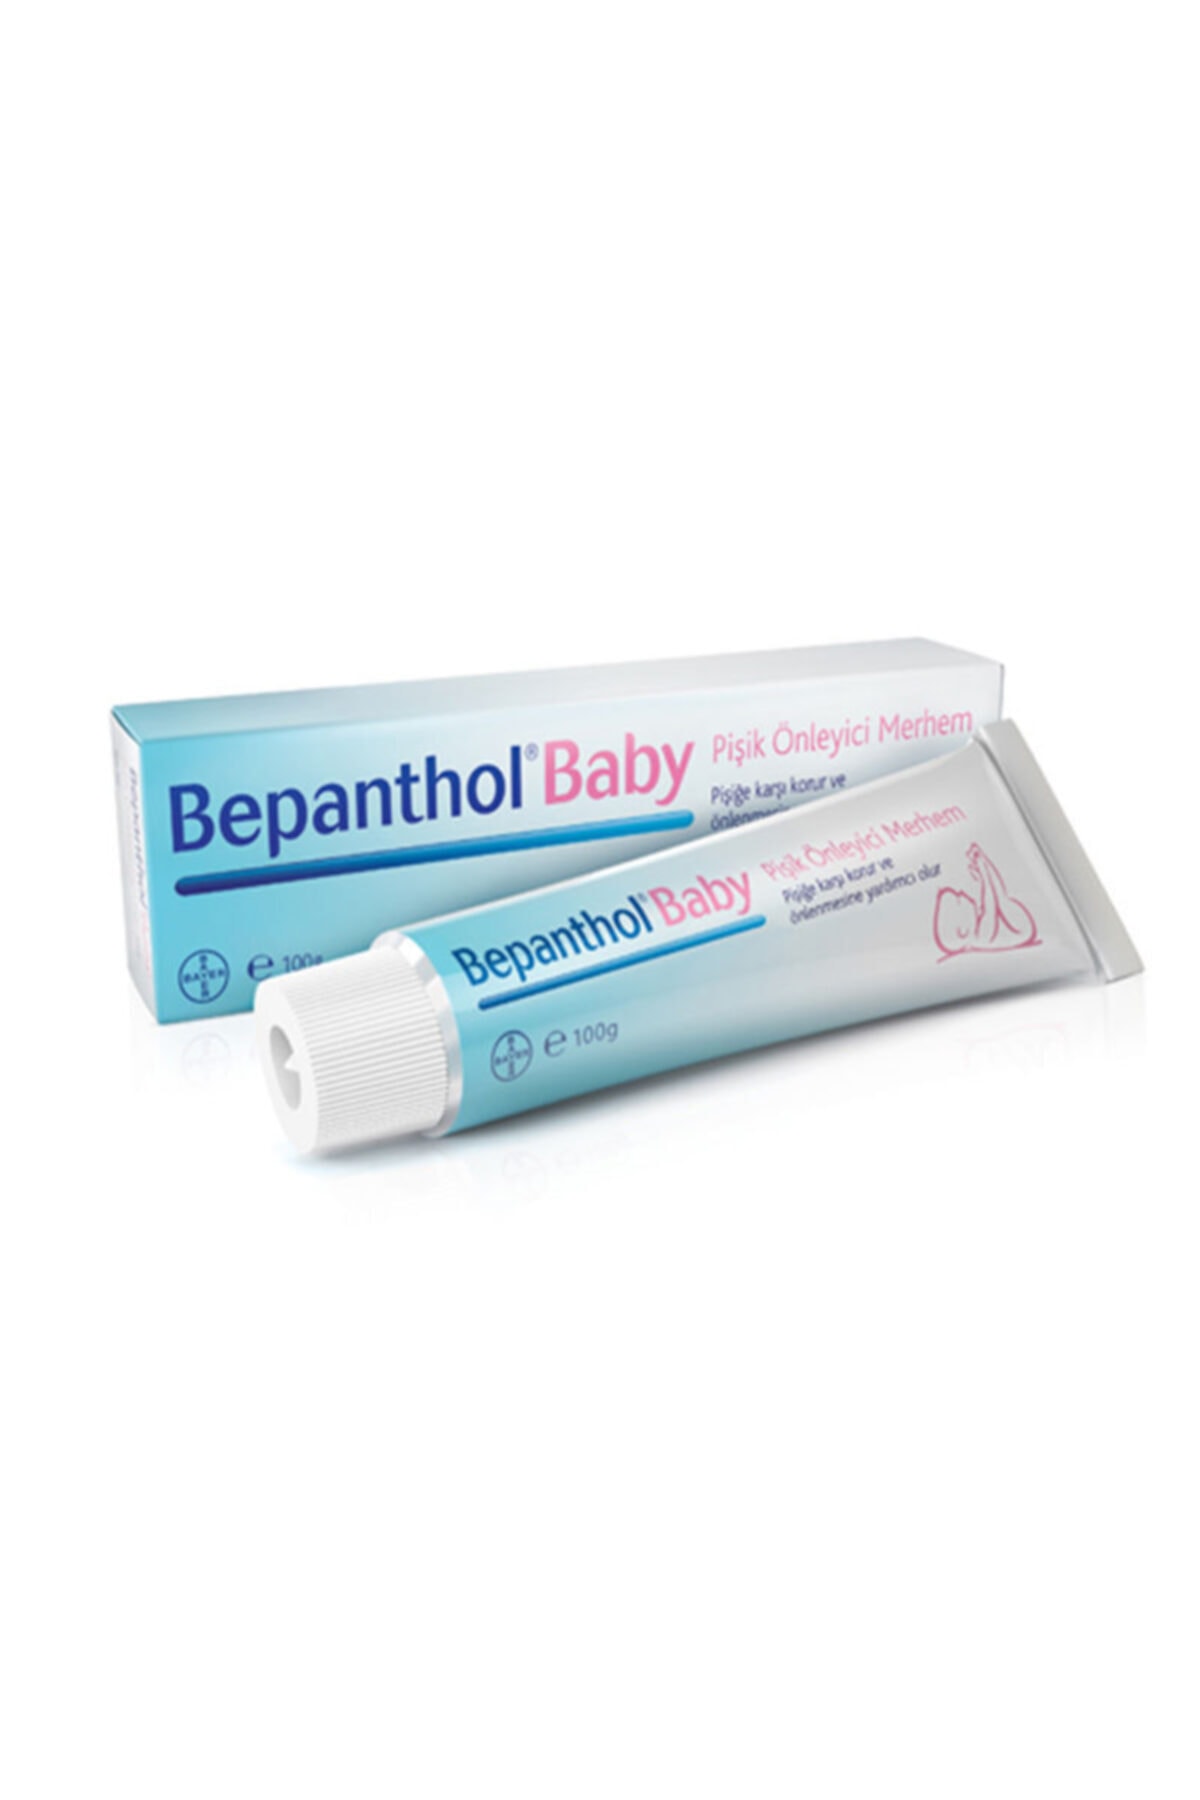 Bepanthol Baby Pişik Önleyici Merhem 100g